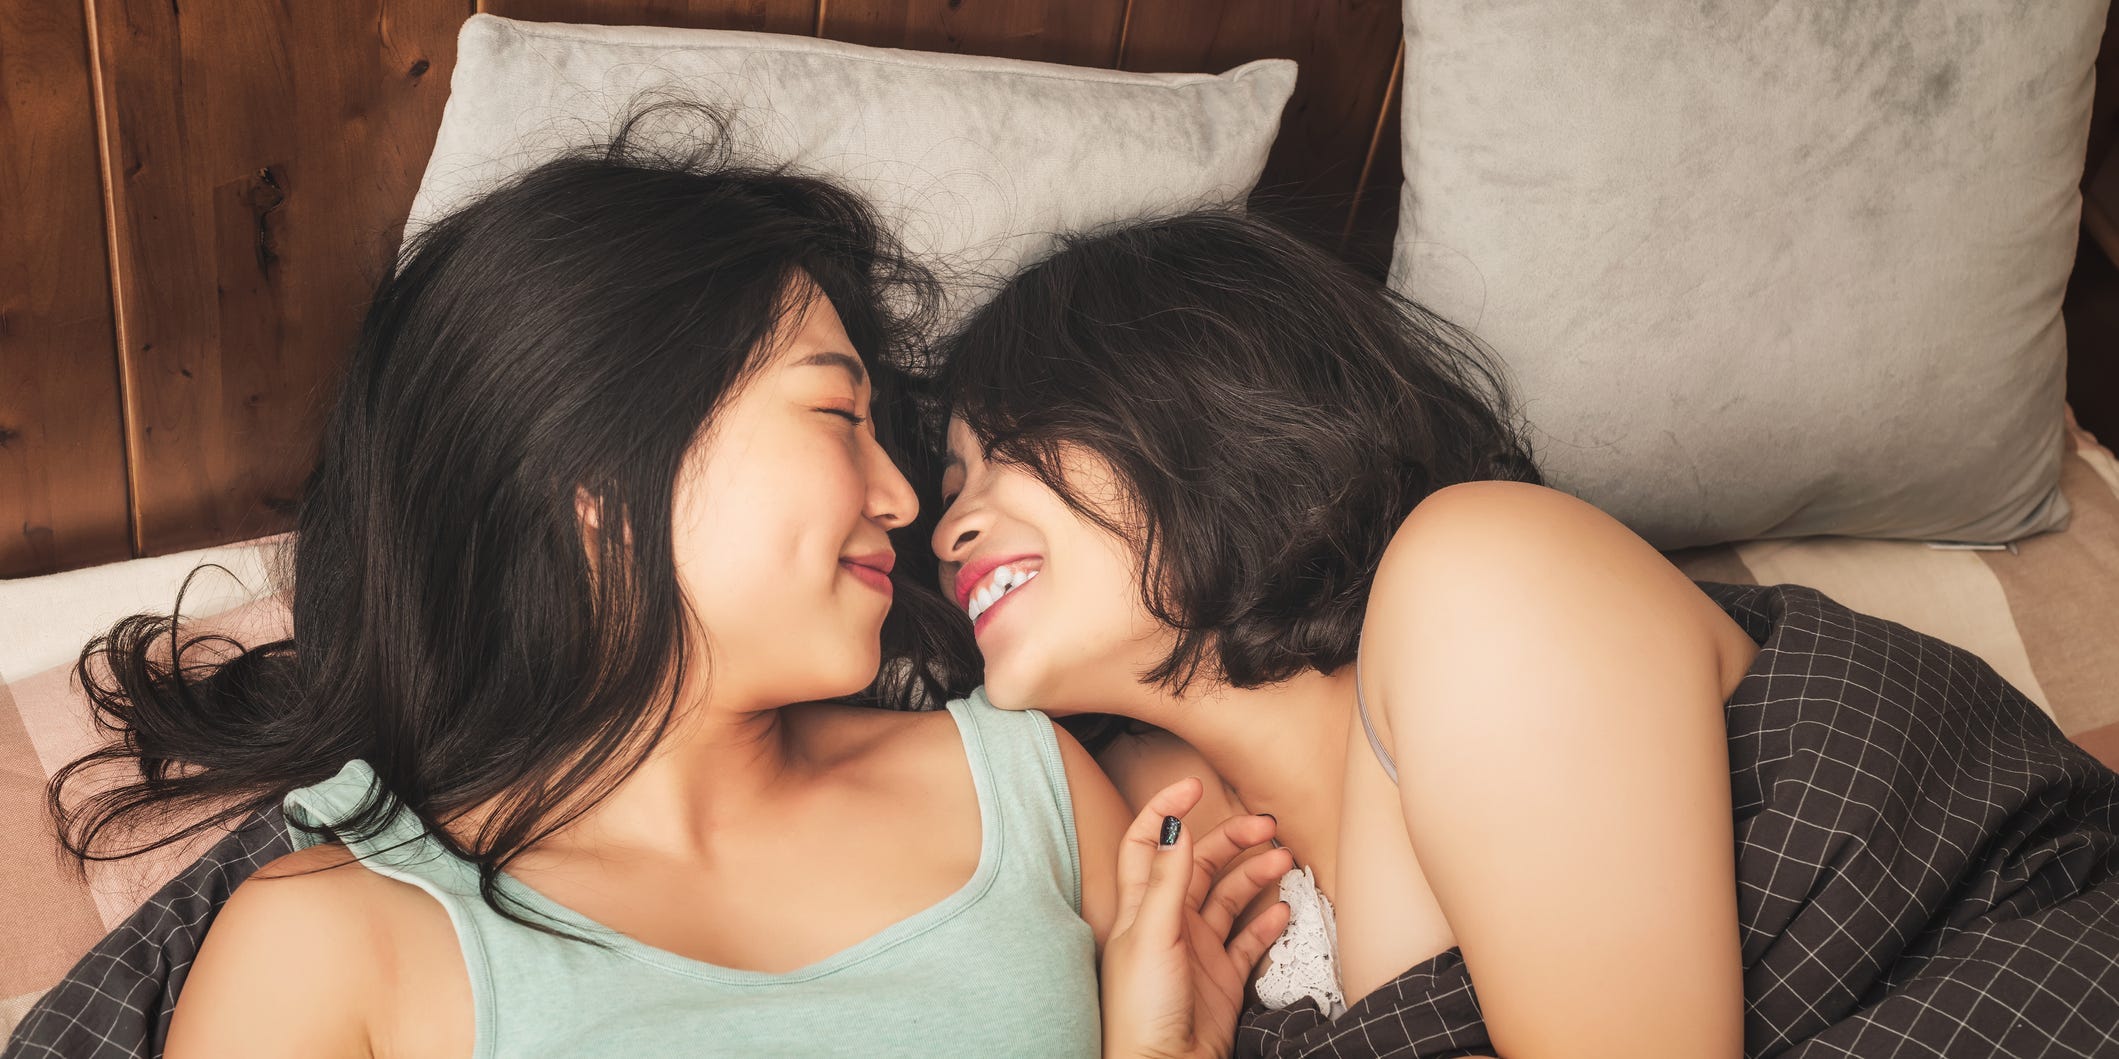 sex couple lesbian bed